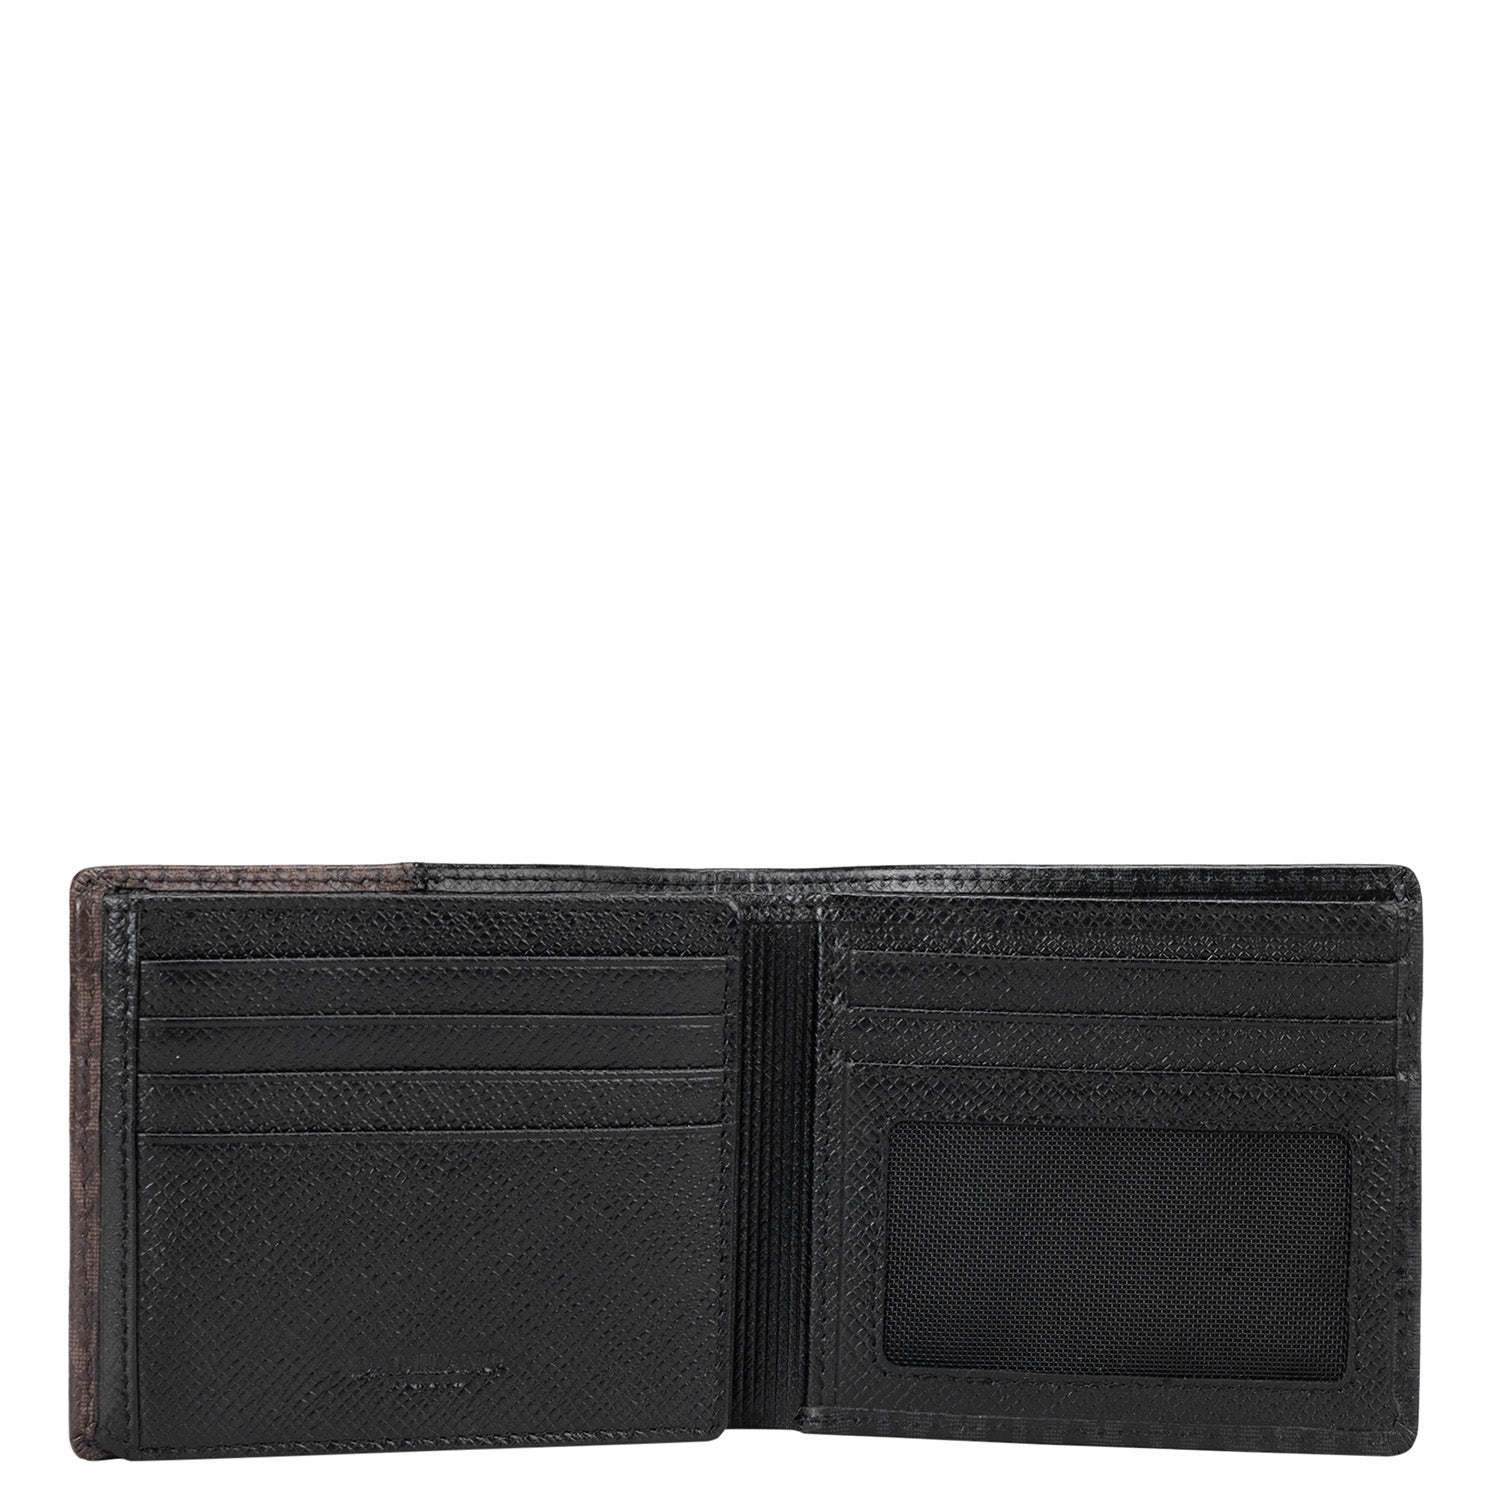 Da Milano Monogram Leather Mens Wallet - Black & Oak